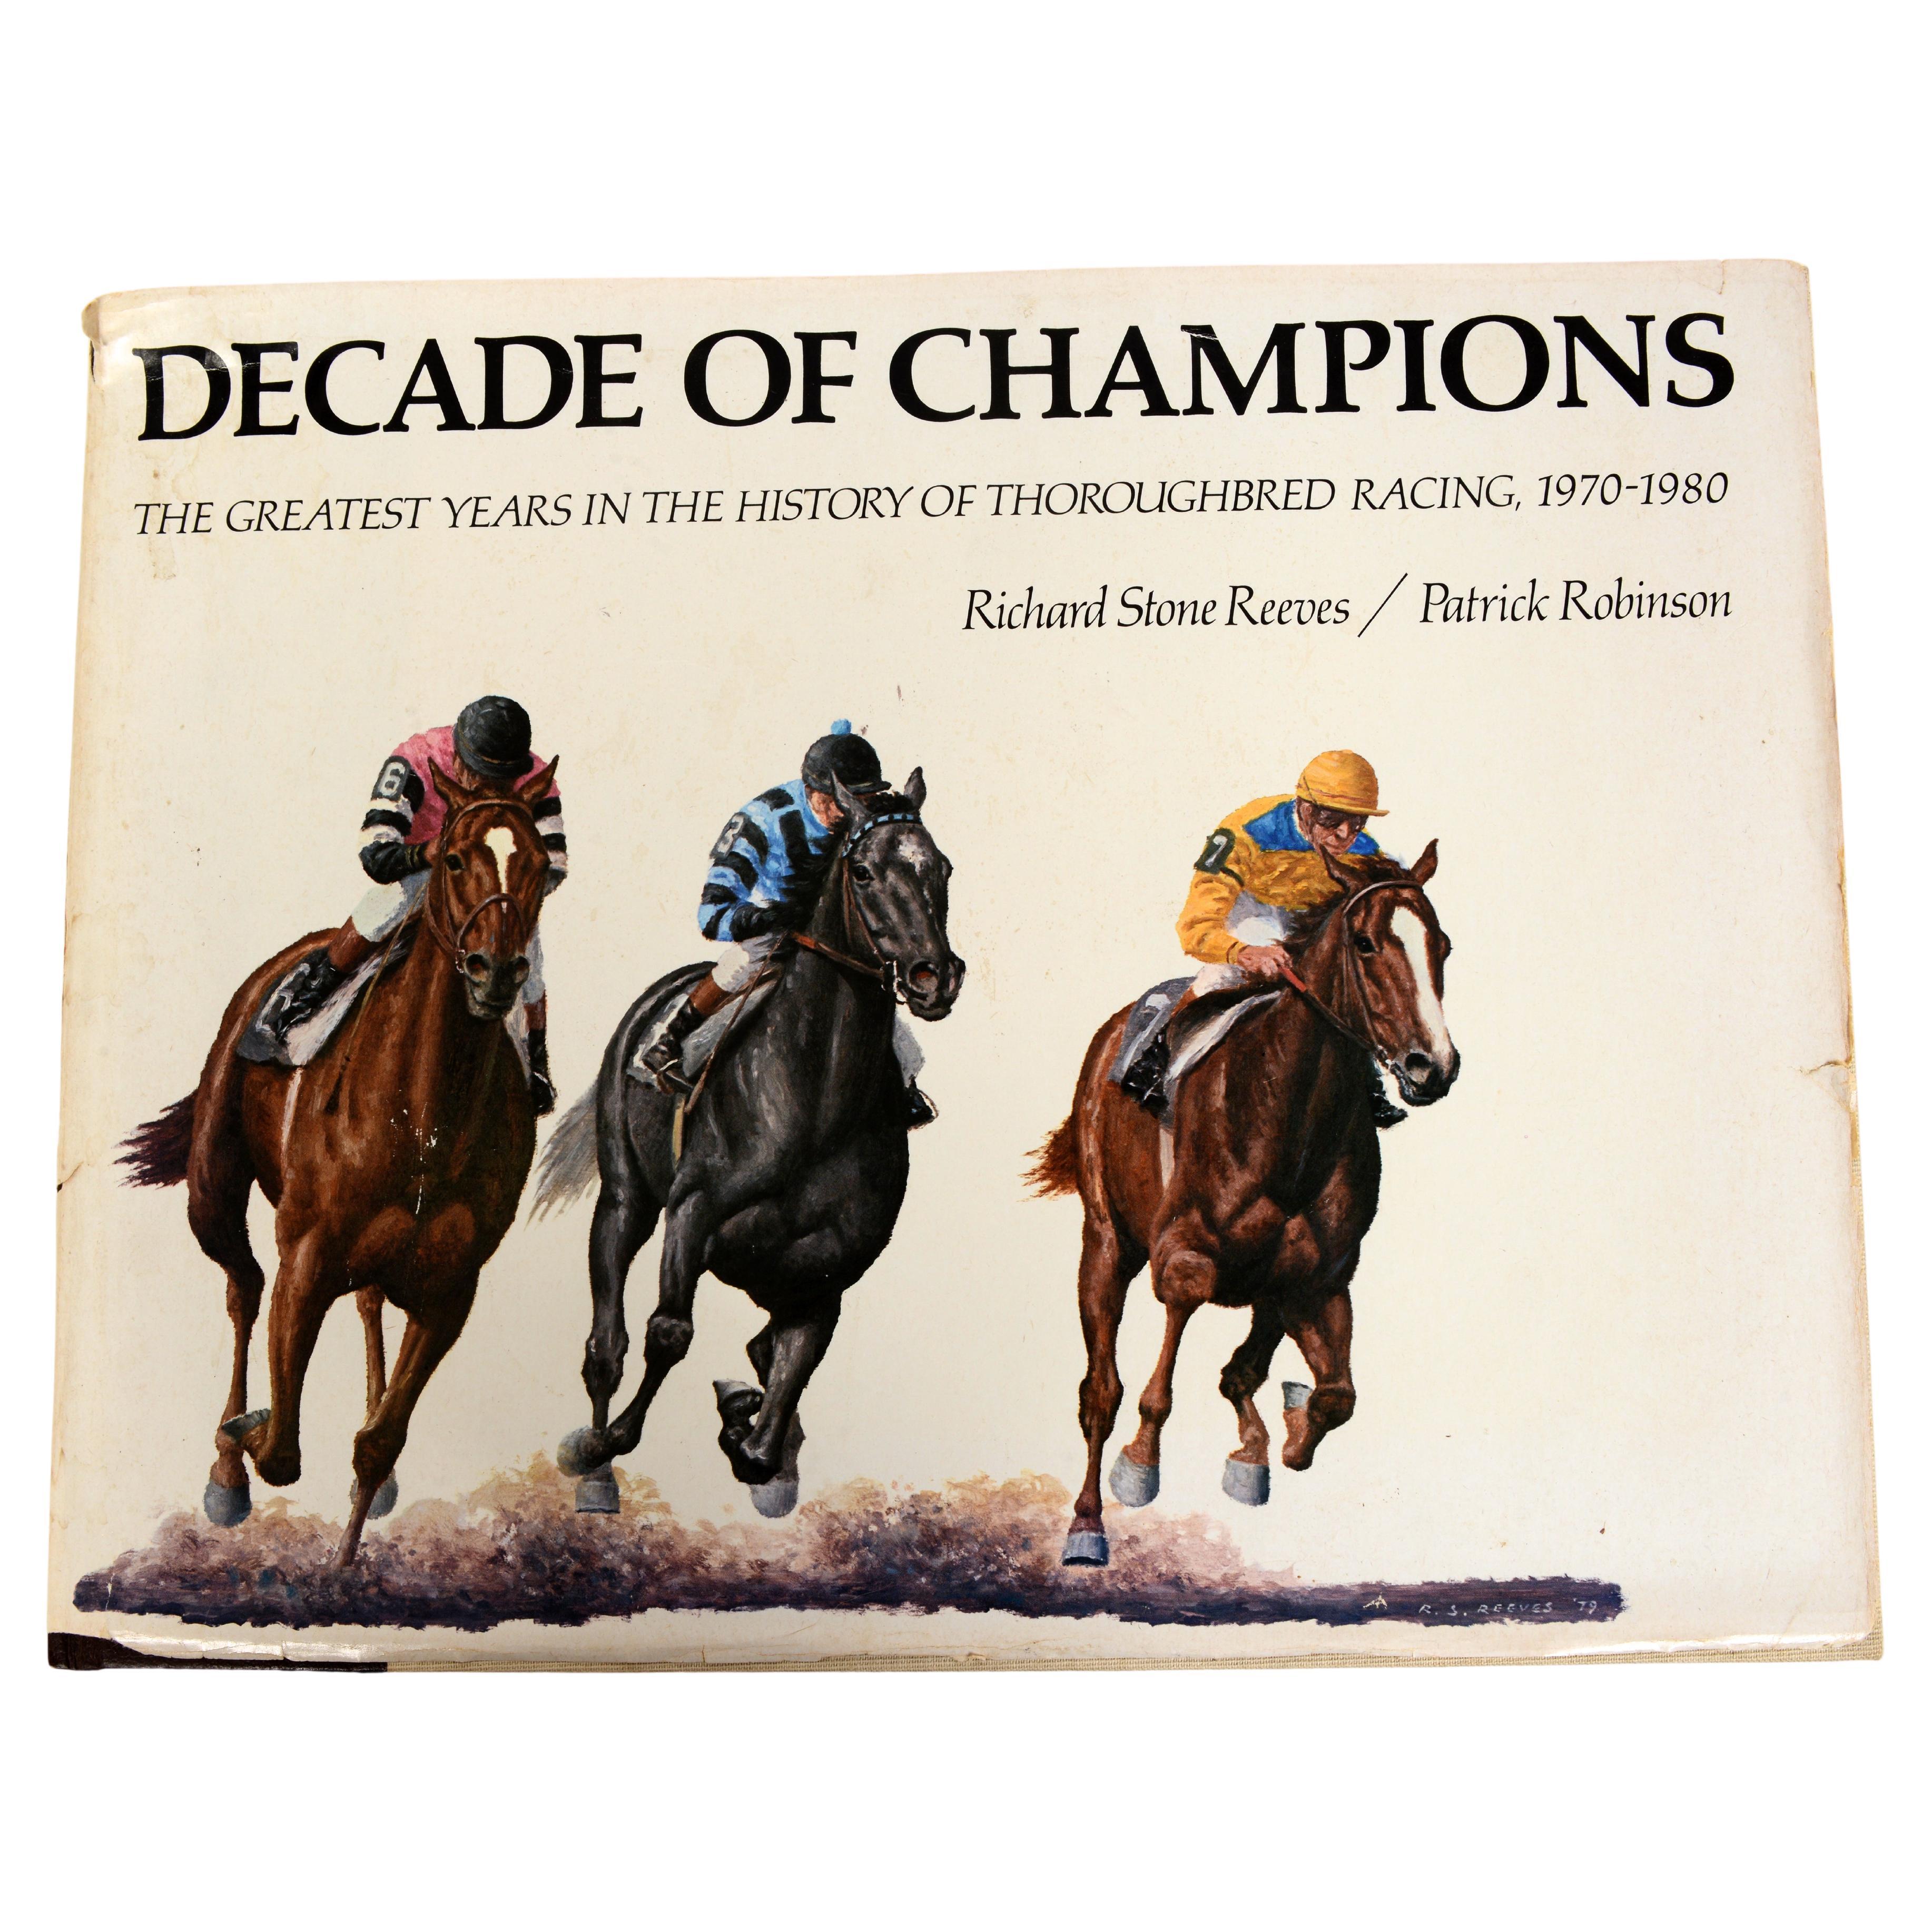 A Decade of Champions de Richard Stone Reeves et Patrick Robinson, 1ère édition 